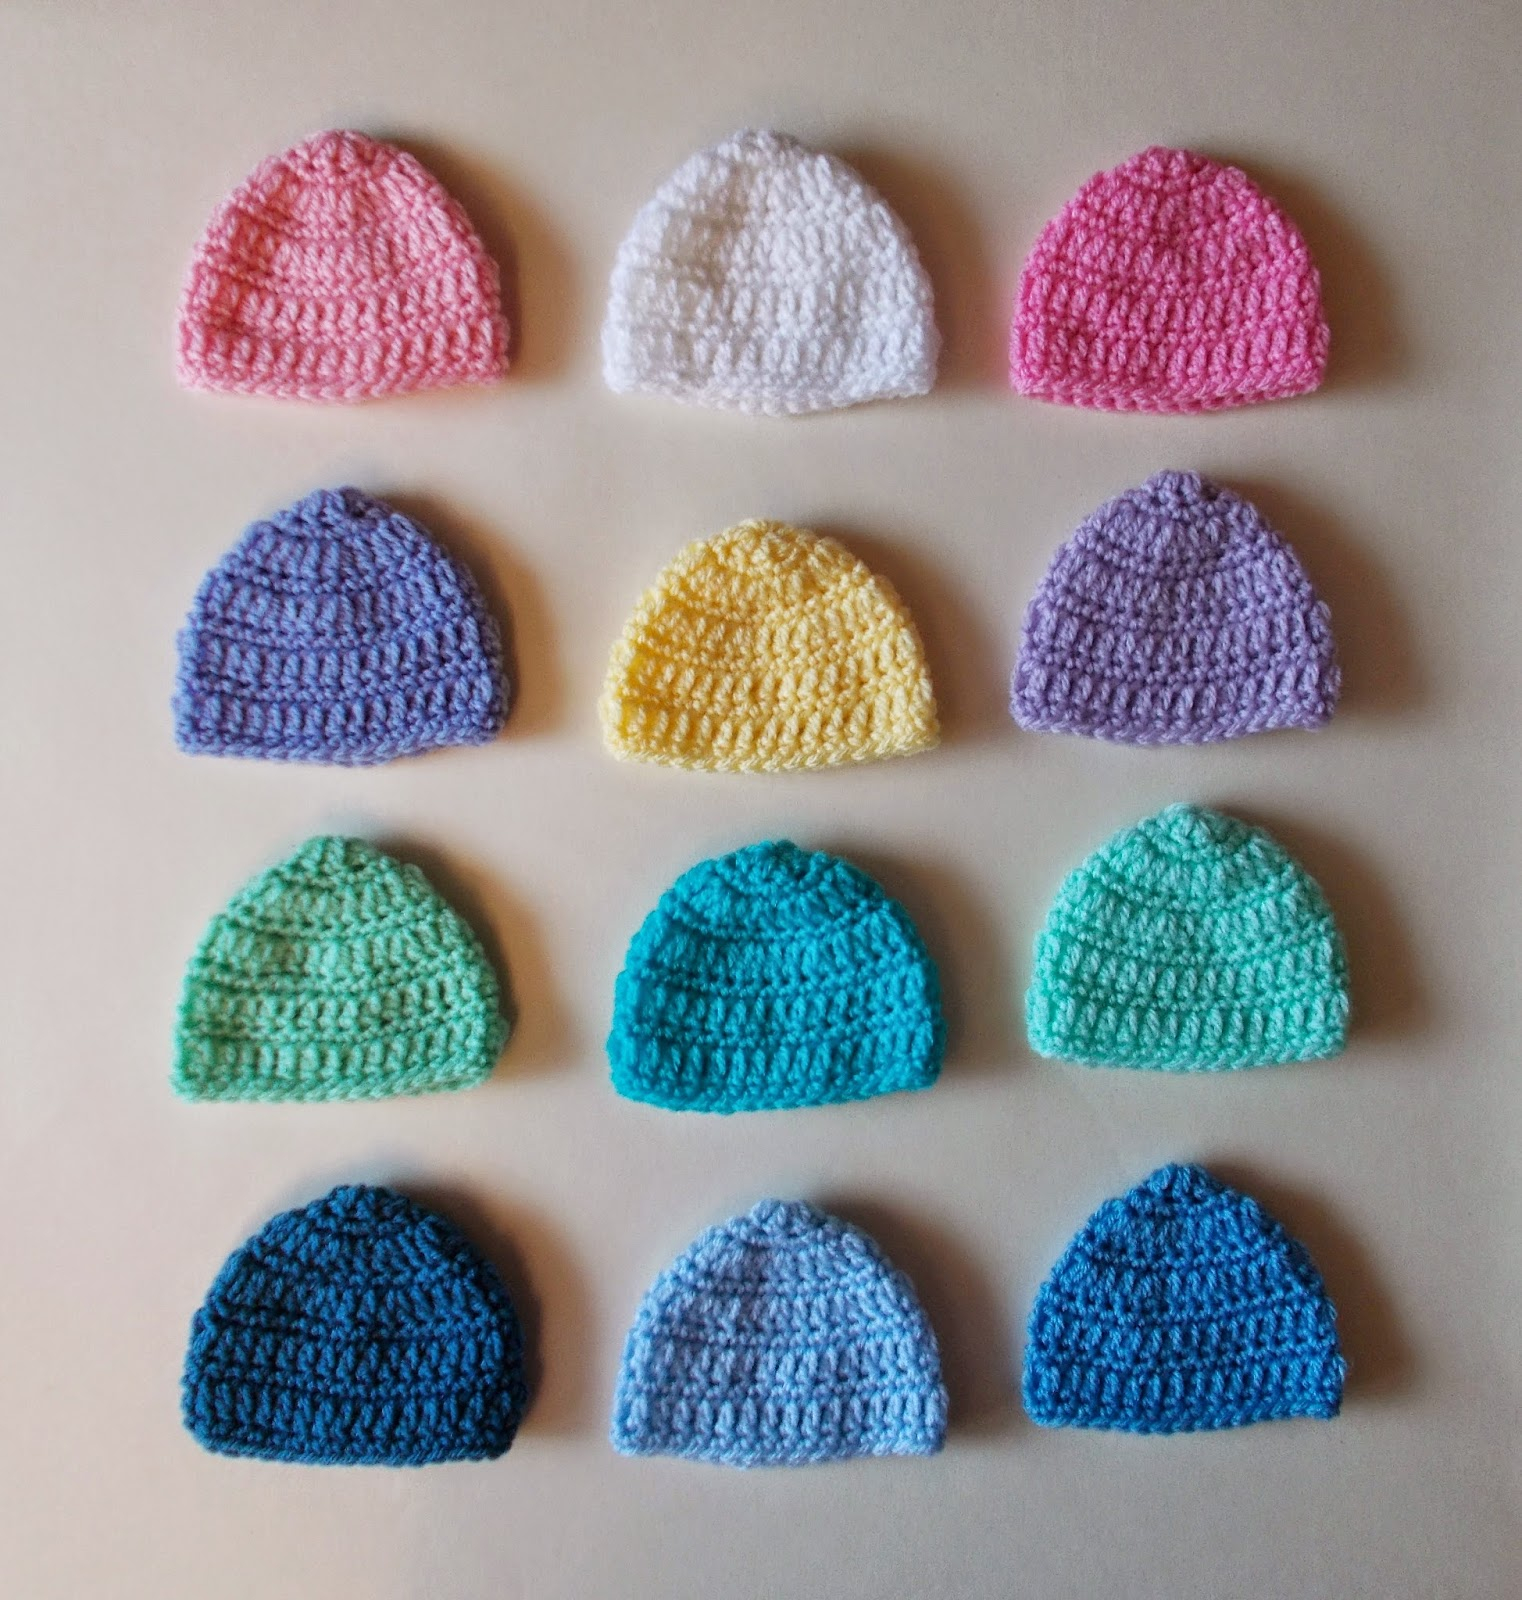 Knitted Preemie Hat Patterns Free Premature Ba Hats Knitting Patterns